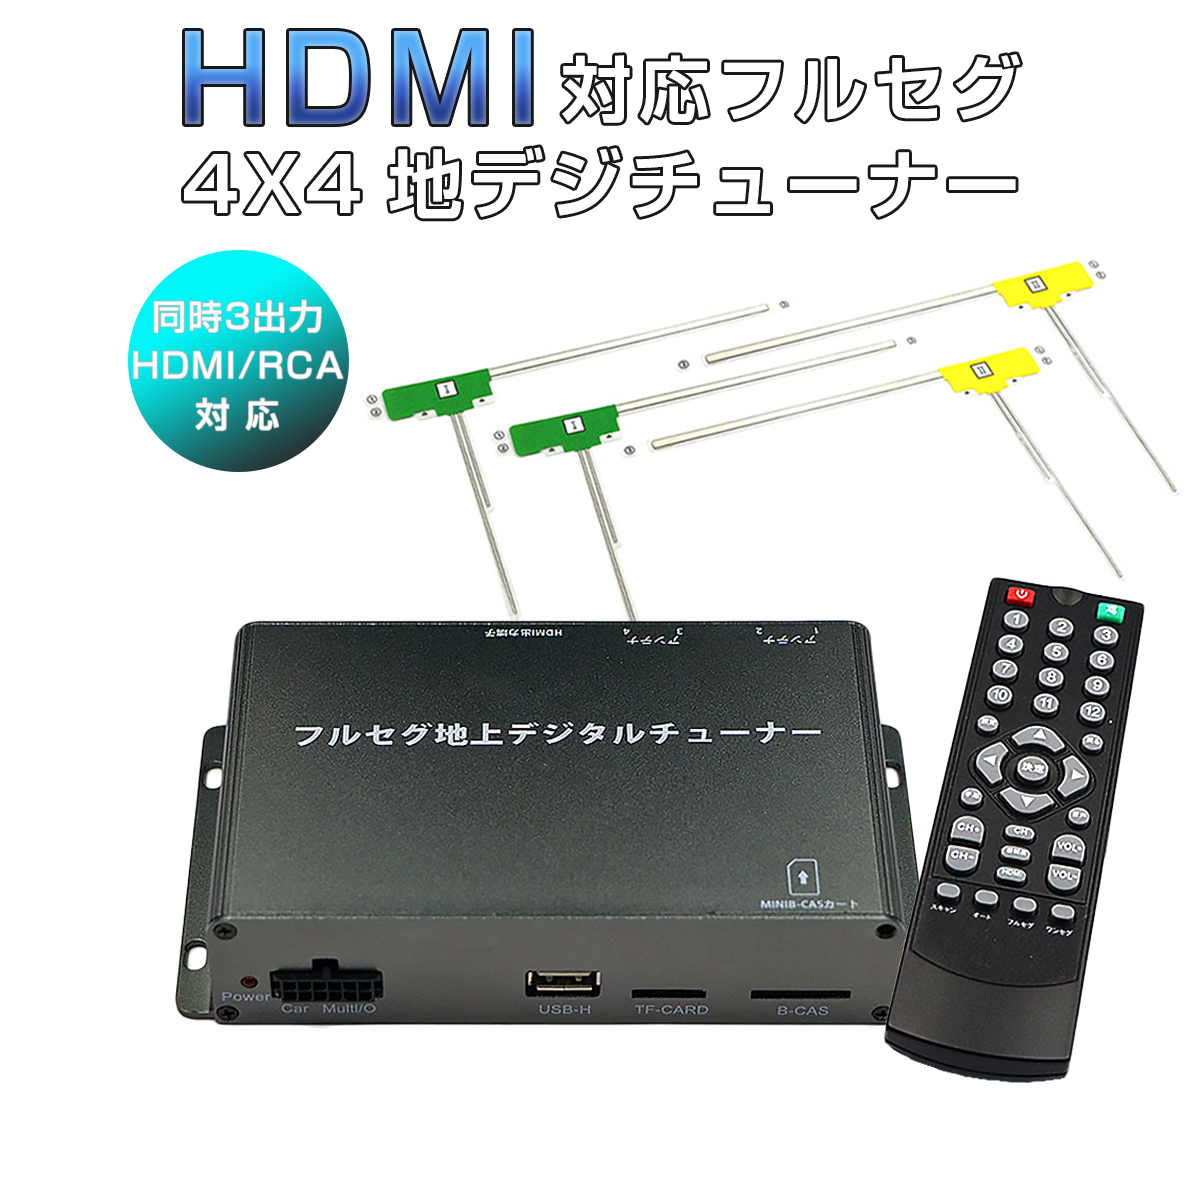 HONDA用の非純正品 ドマーニ 地デジチューナー カーナビ ワンセグ フルセグ HDMI 4x4 高性能 4チューナー 4アンテナ 高画質 自動切換 150km/hまで受信 古い車載TVやカーナビにも使える 12V/24V フィルムアンテナ miniB-CASカード付き 6ヶ月保証